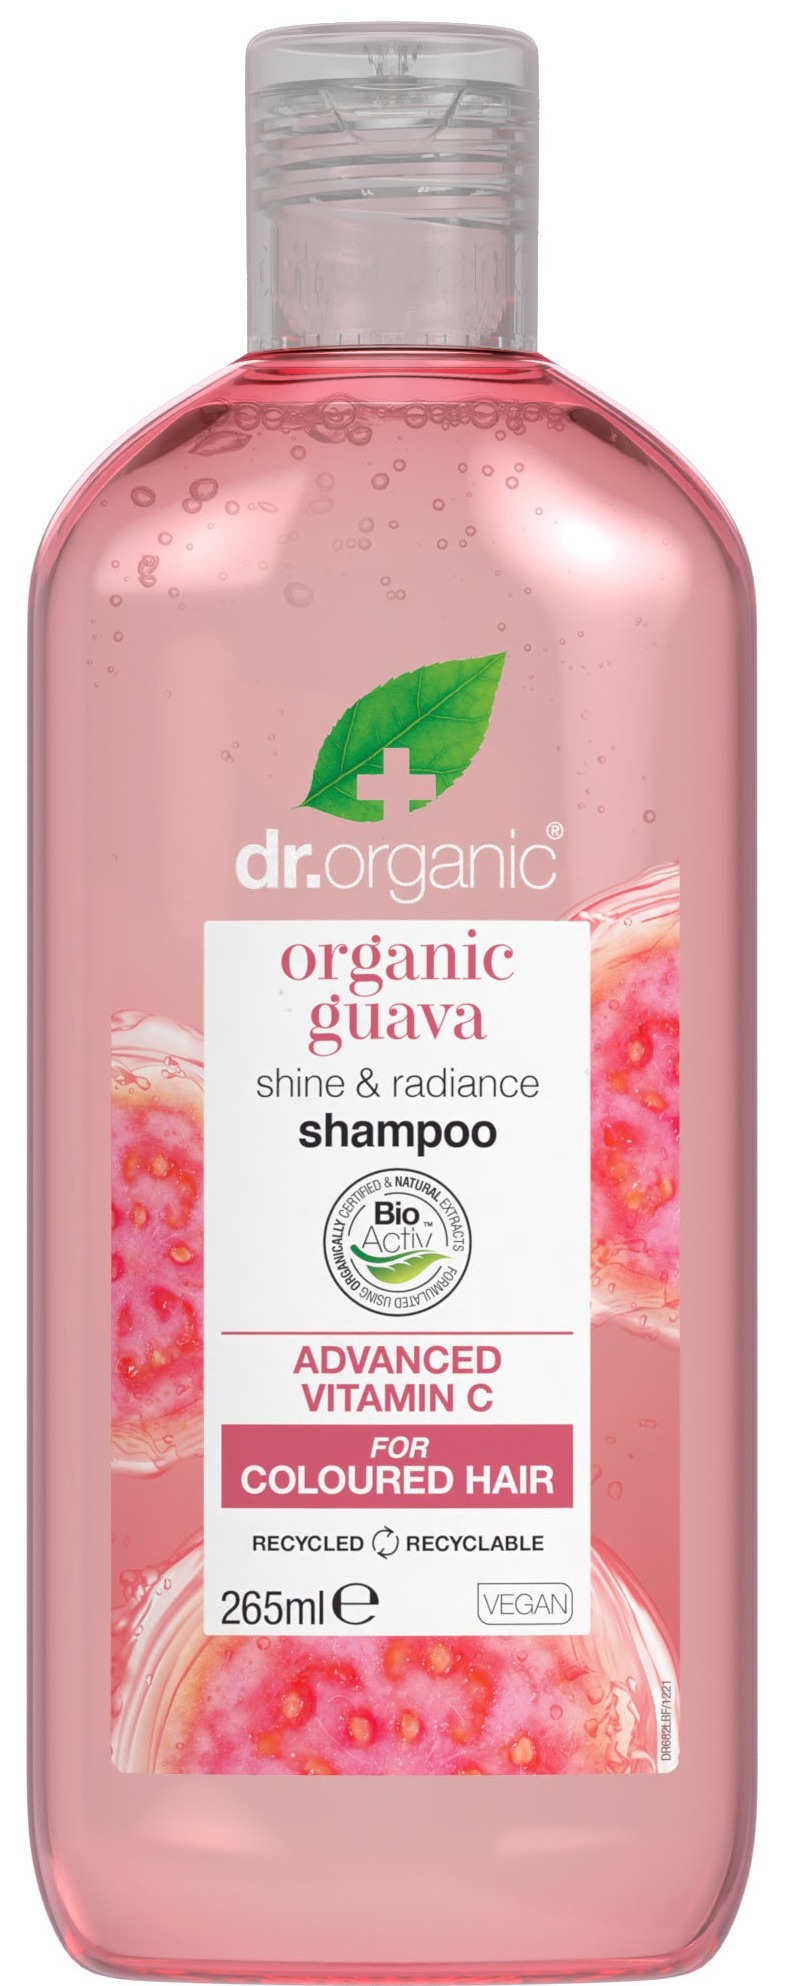 Dr Organic Guava Shampoo